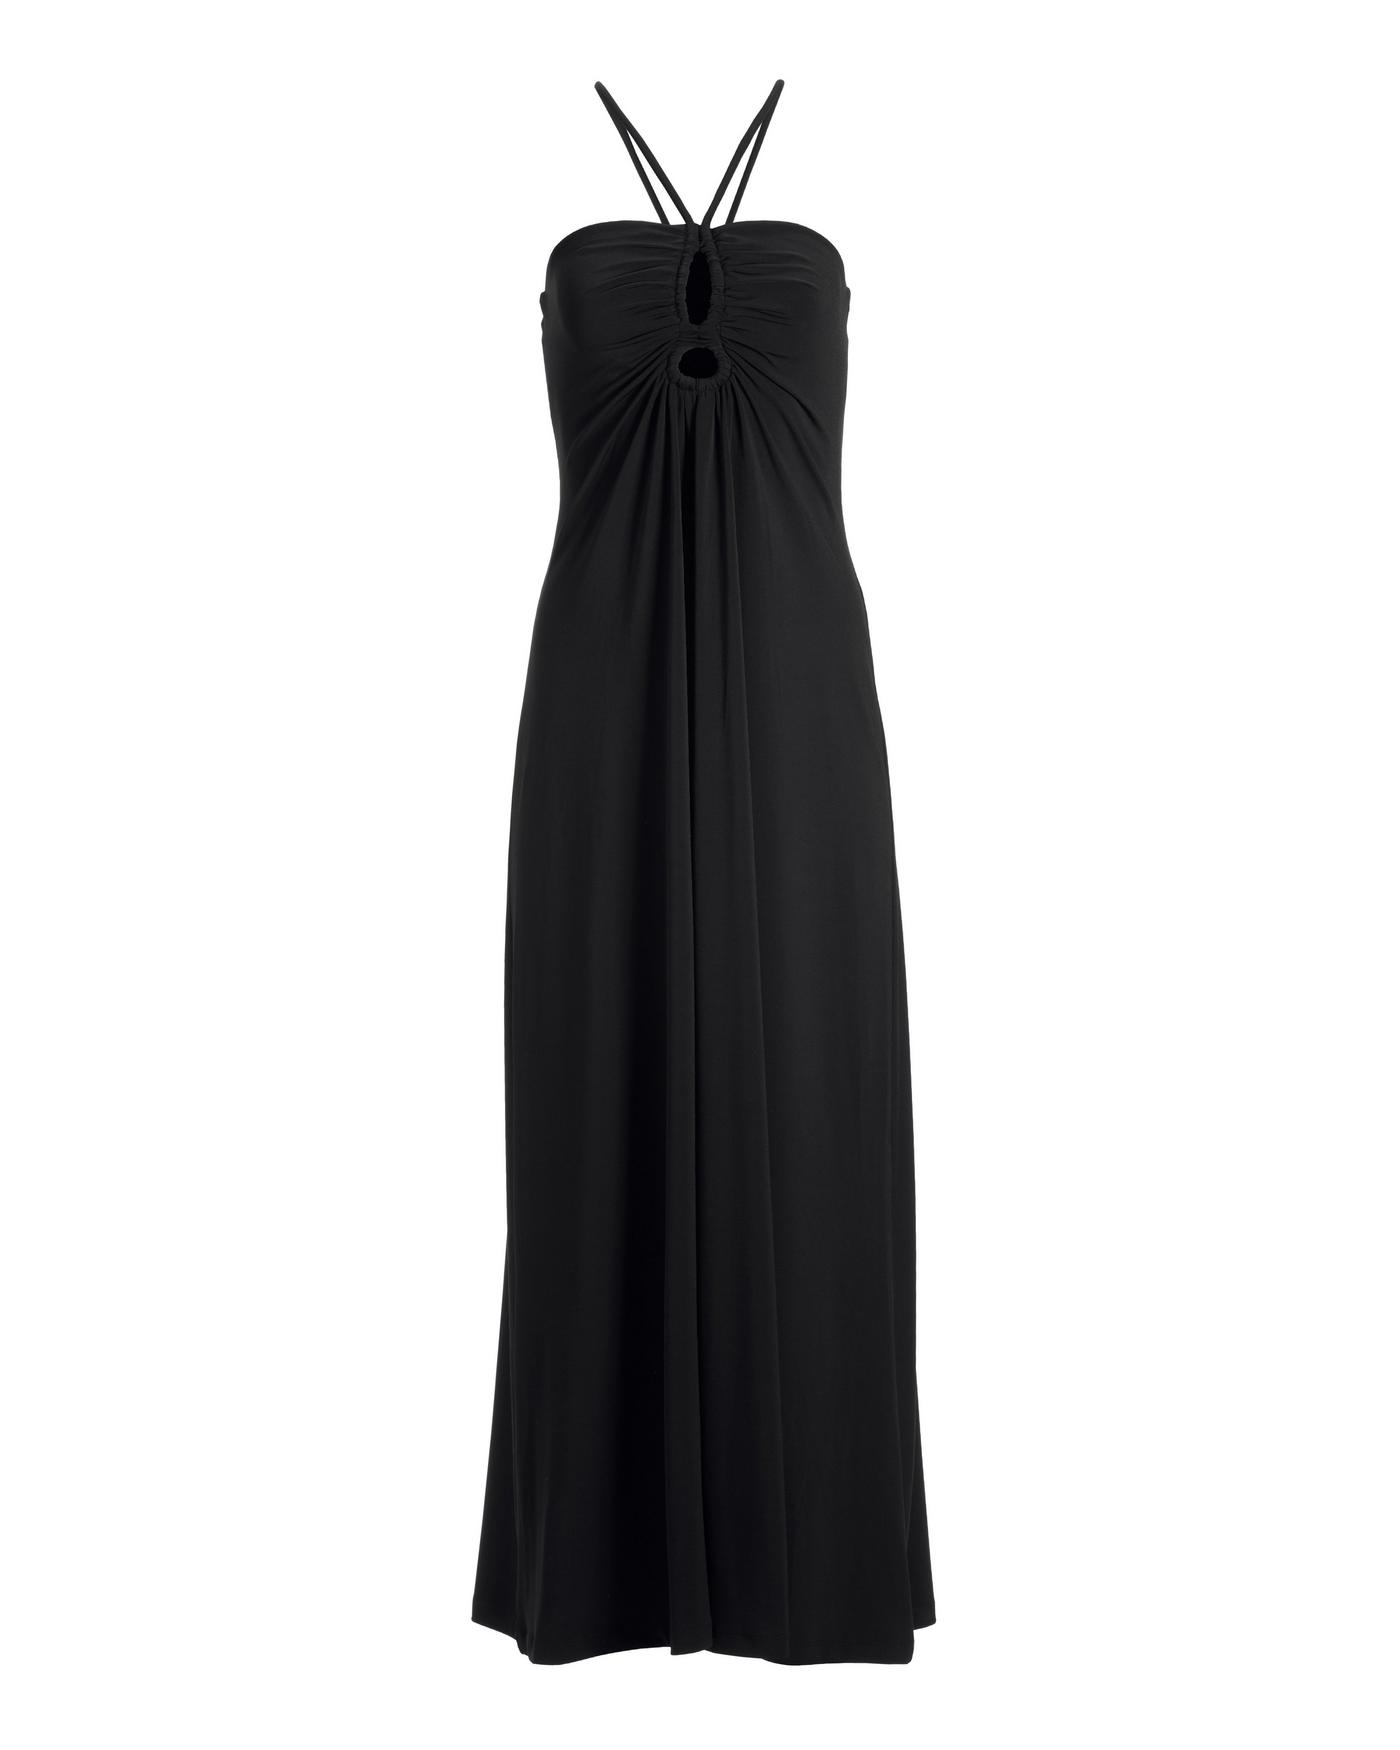 Buy Lipsy Black Applique Halter Maxi Dress from Next USA